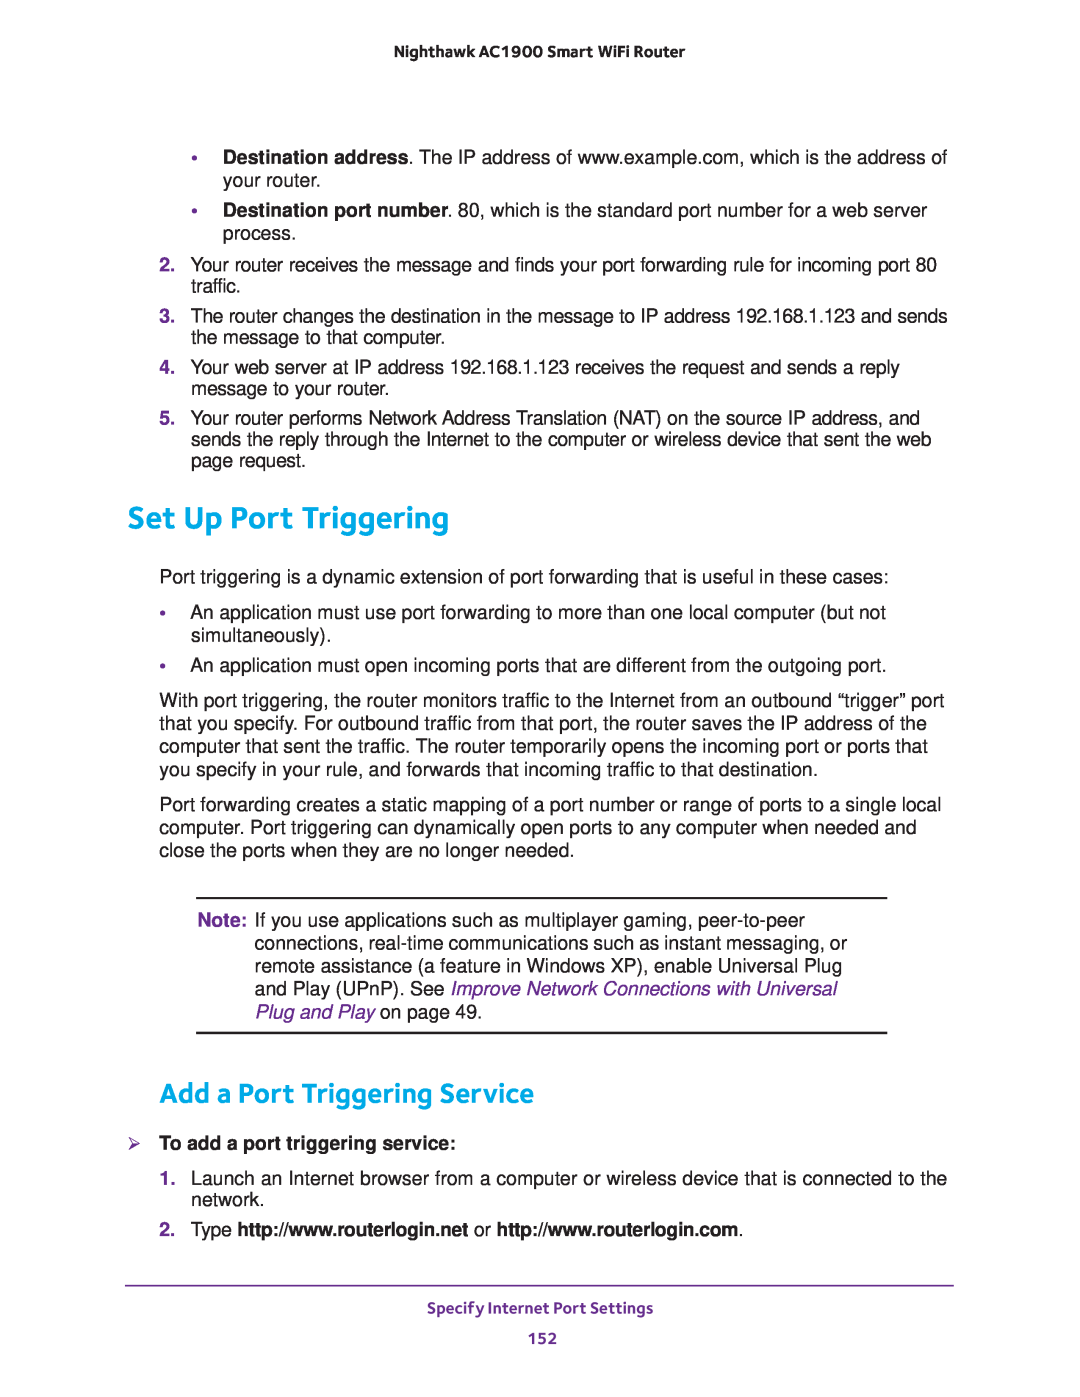 NETGEAR Model R7000 user manual Set Up Port Triggering, Add a Port Triggering Service,  To add a port triggering service 